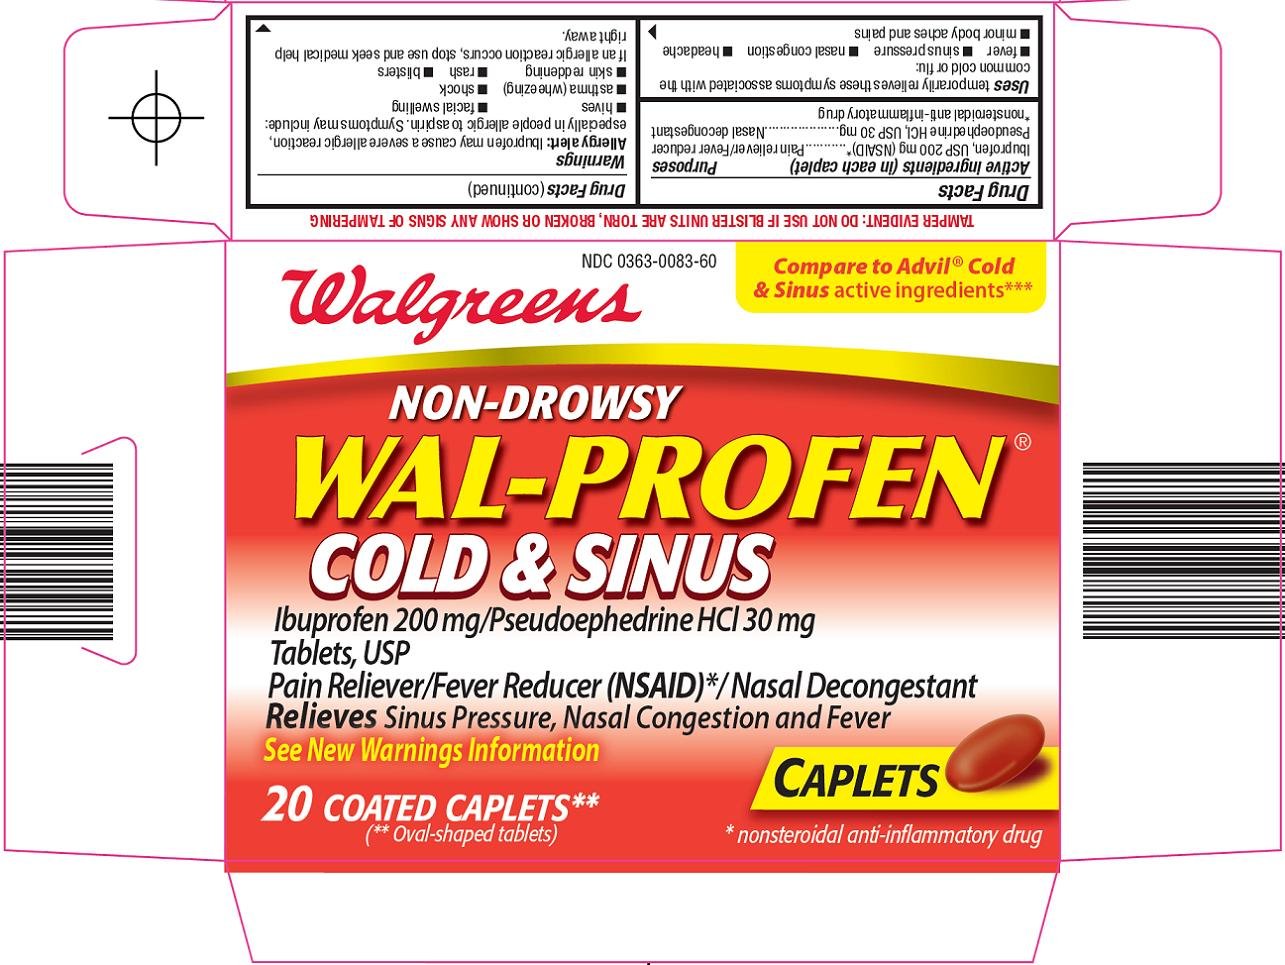 Wal-Profen Cold & Sinus Carton Image 1